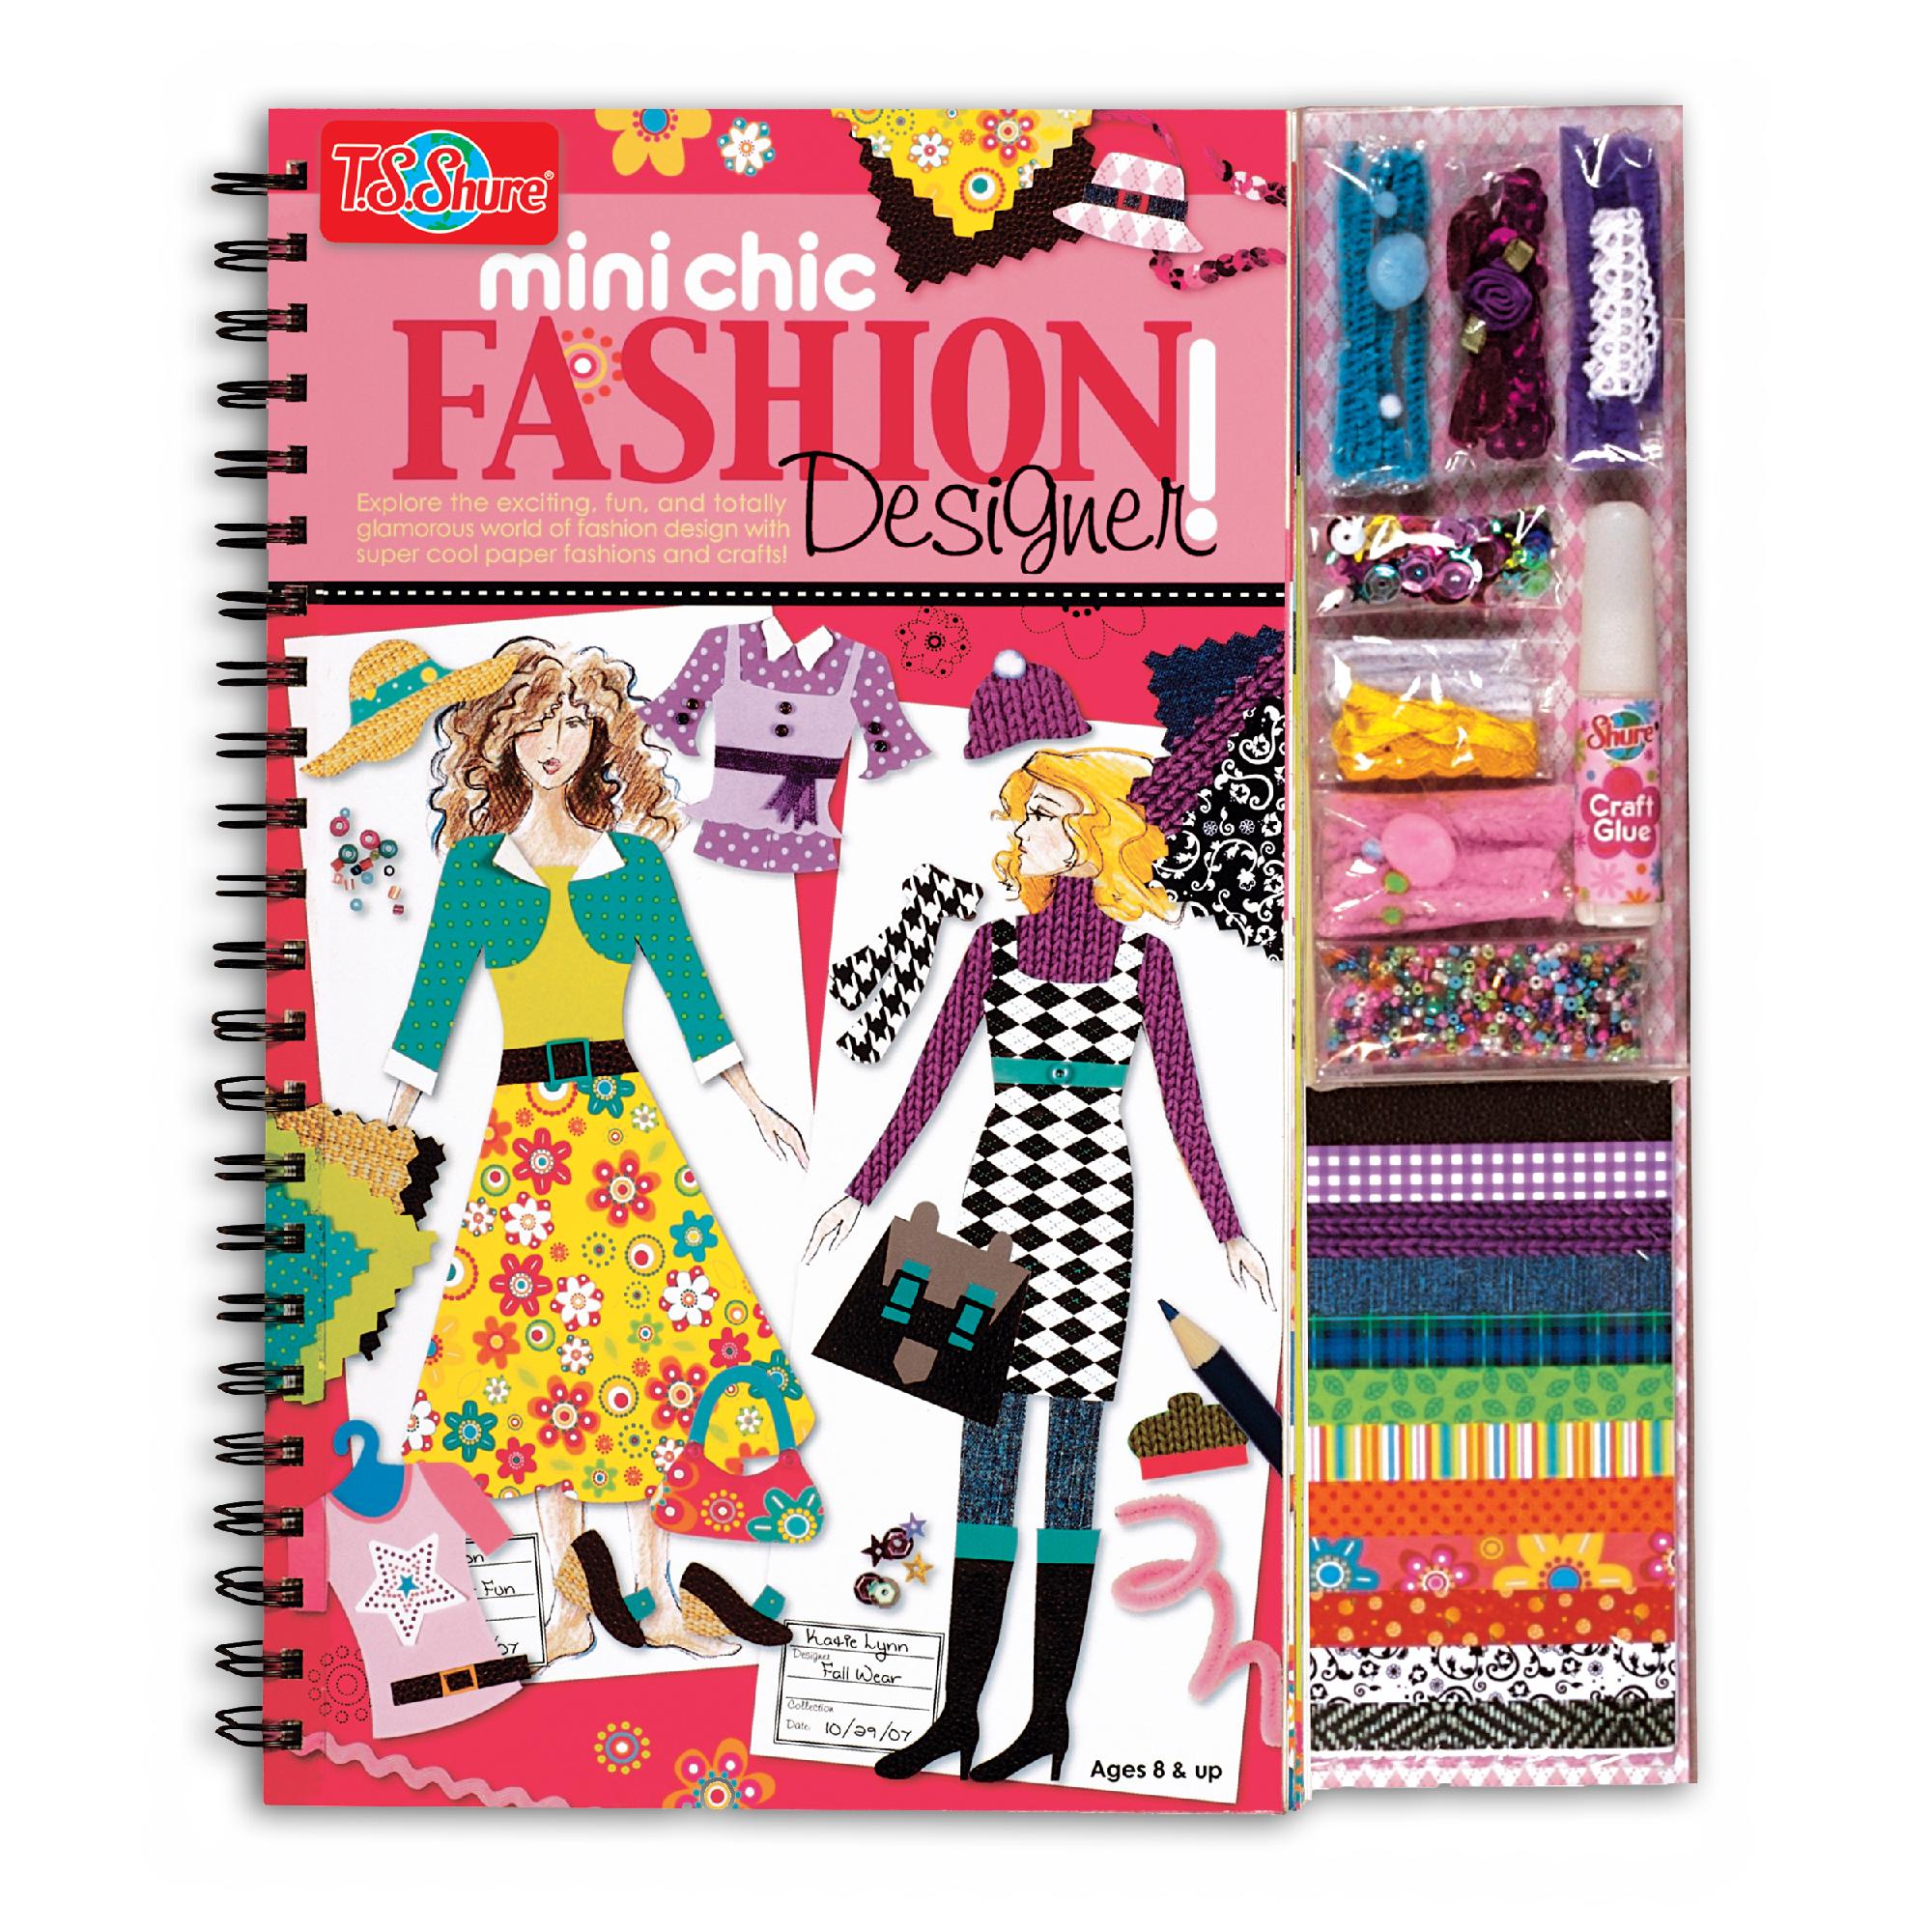 Shure Mini Chic Fashion Designer Book and Kit   Toys & Games